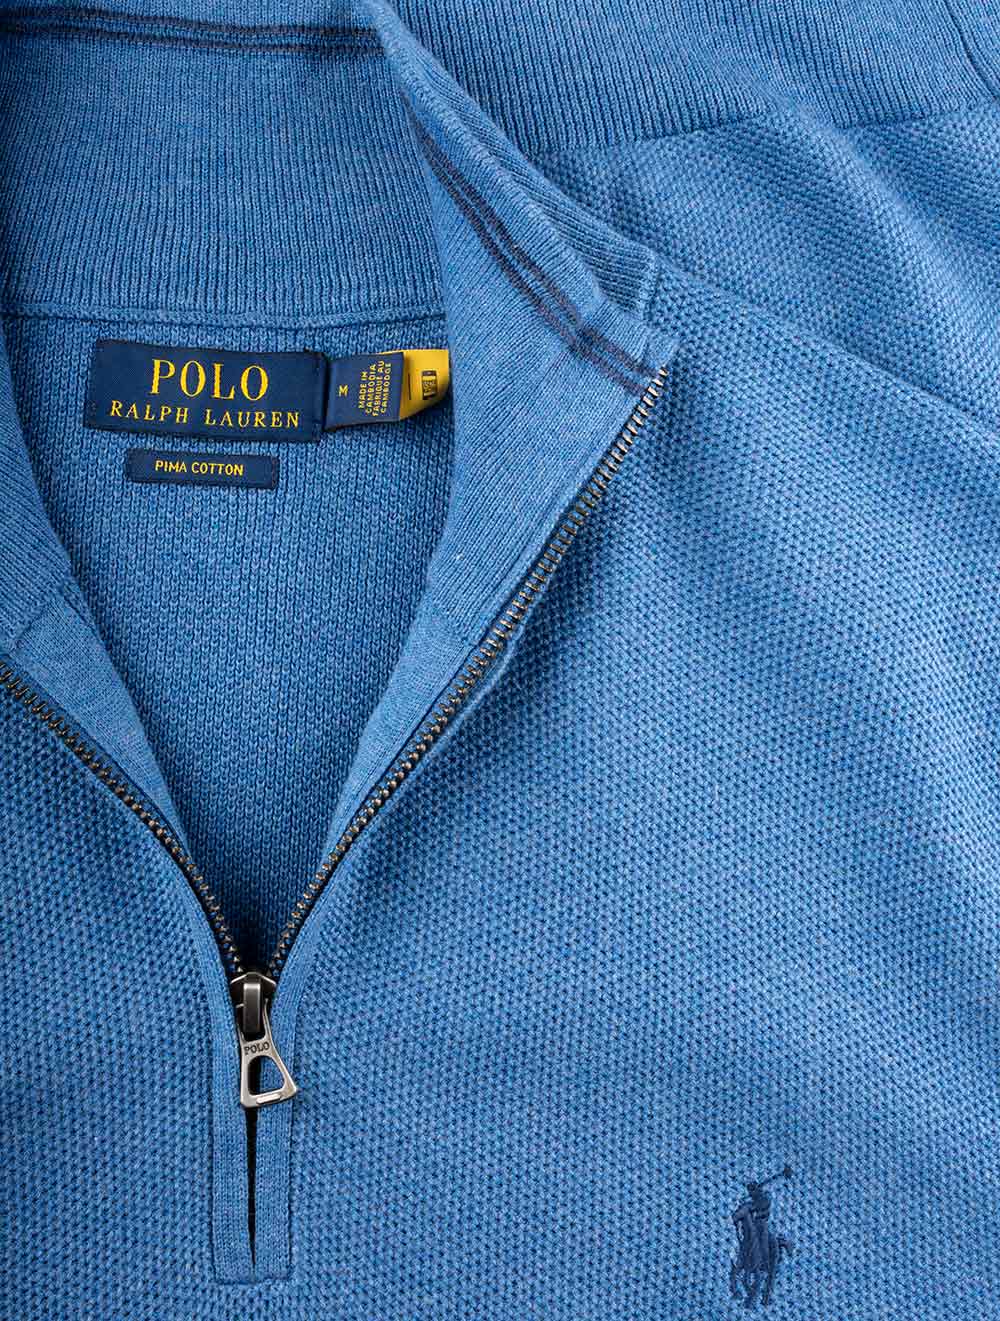 Pima Texture Half Zip Pullover Blue